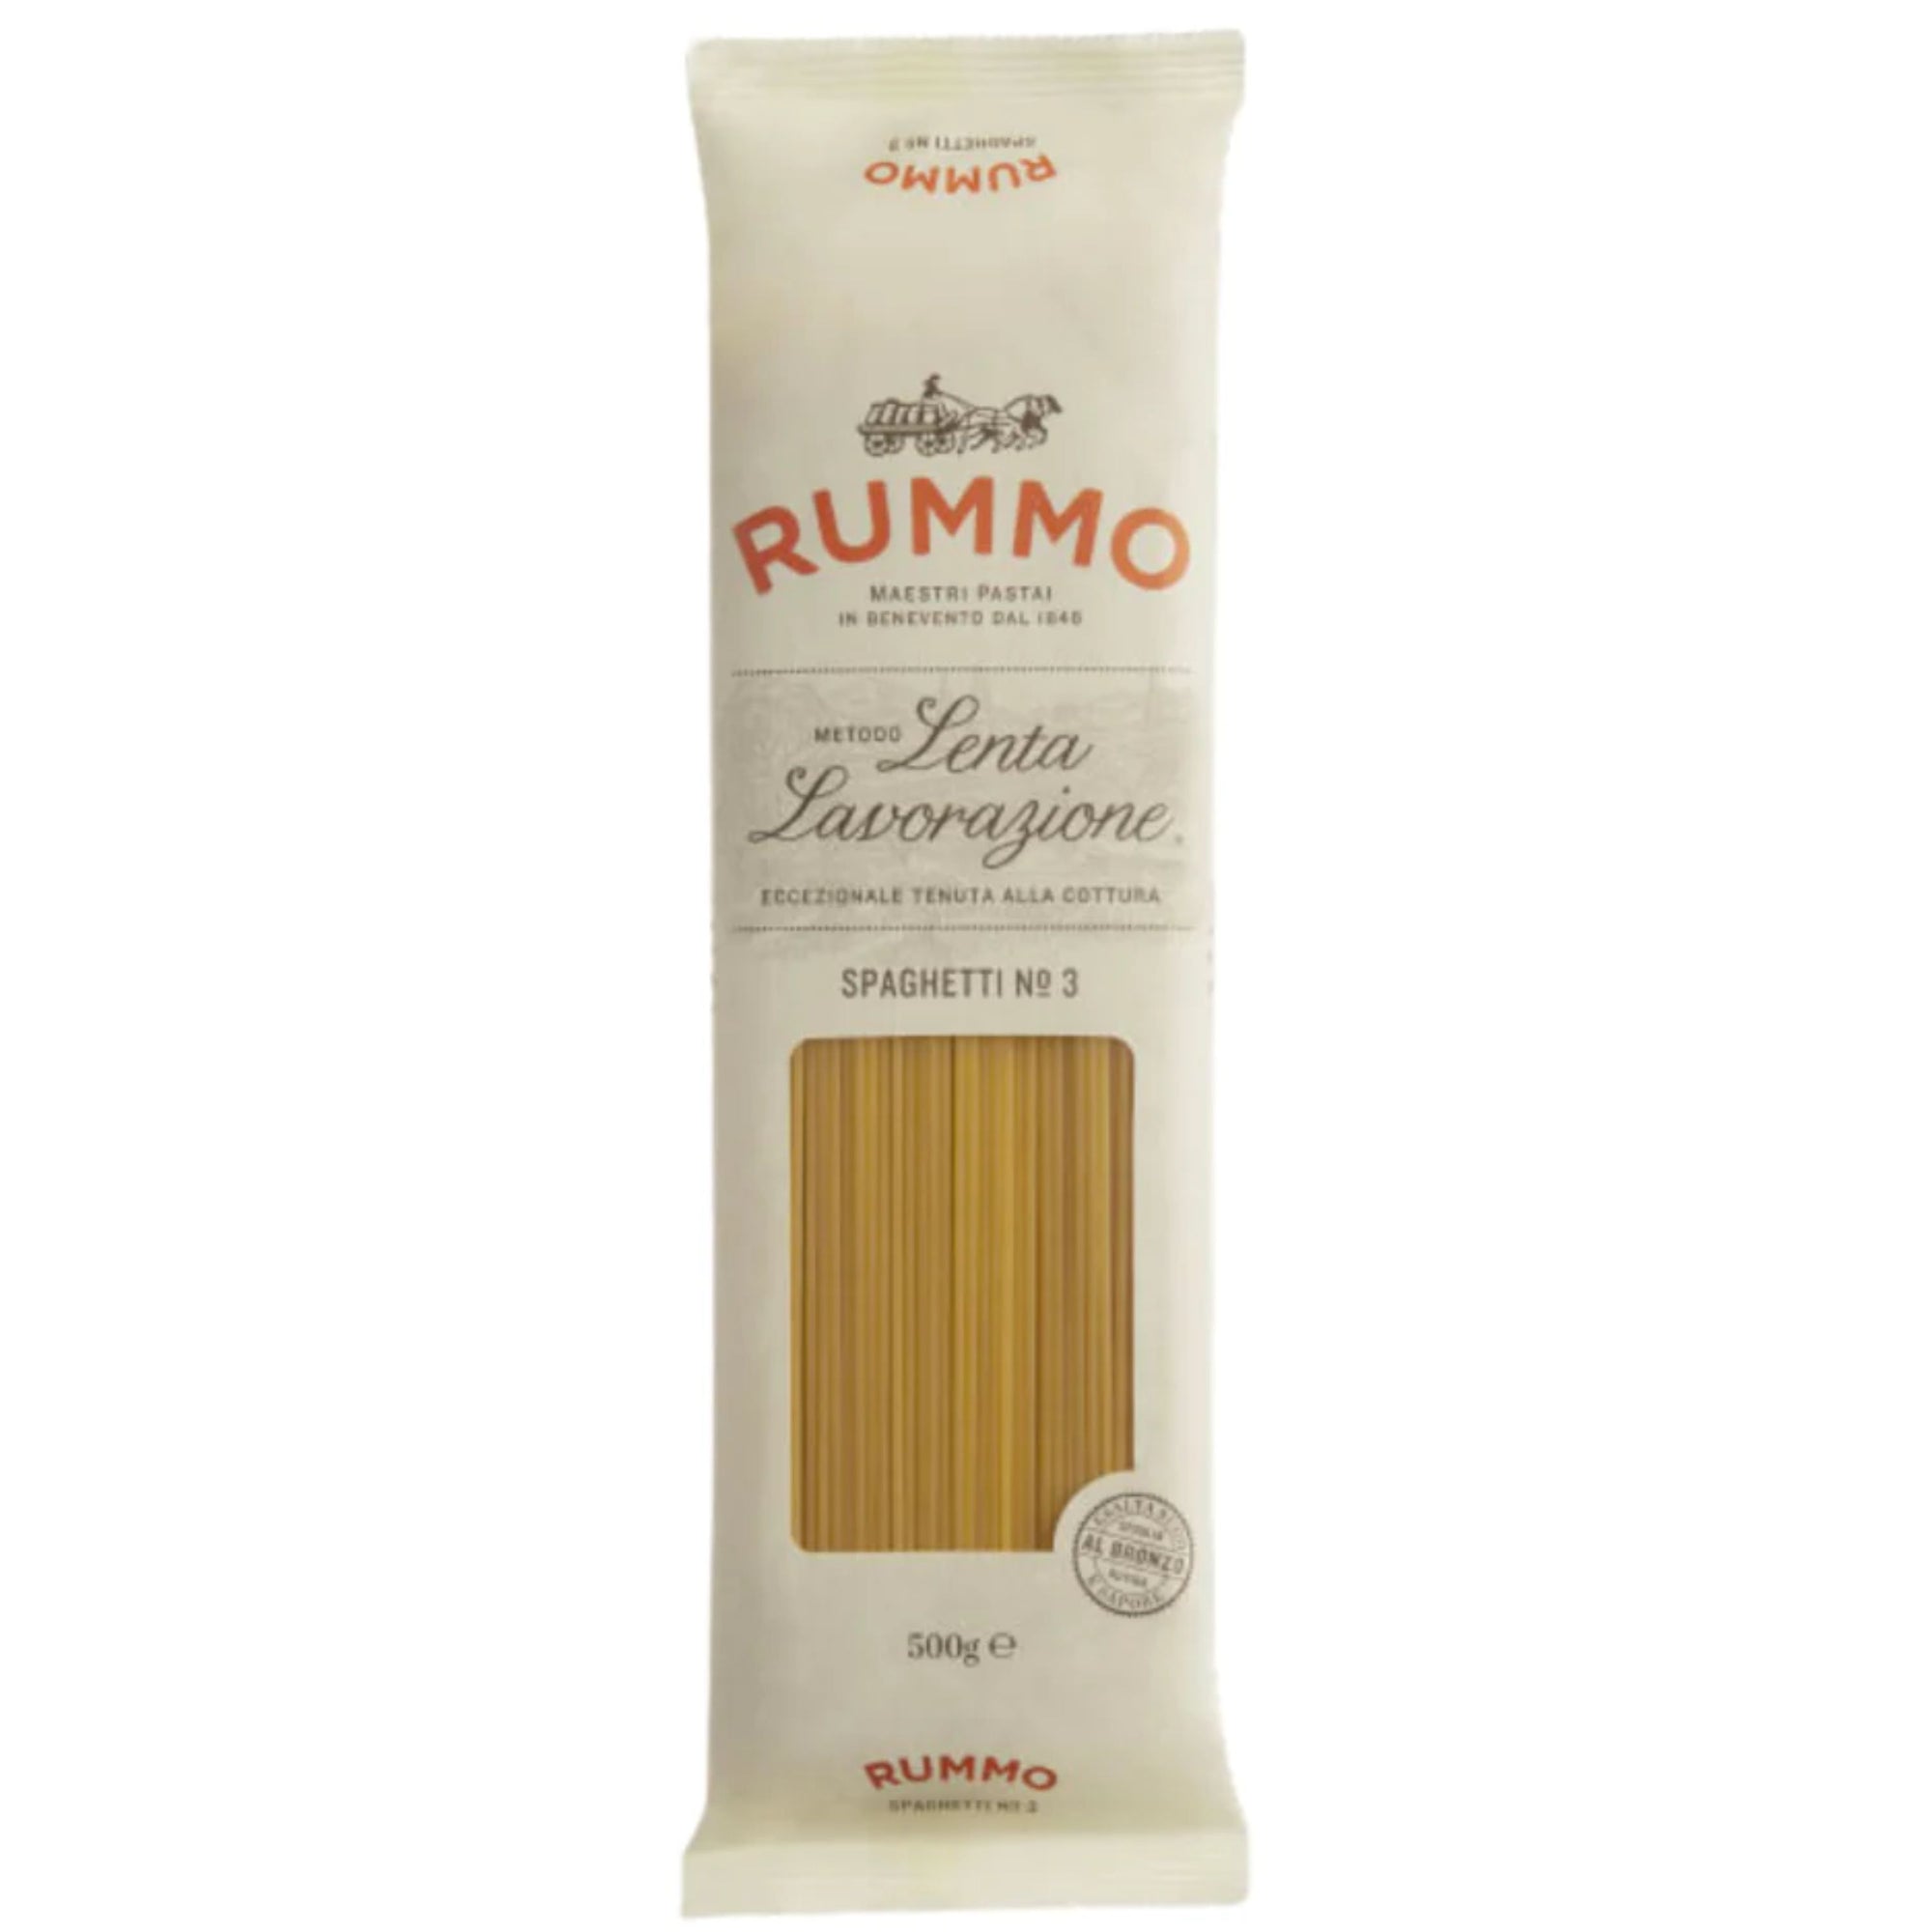 Spaghetti No.3 'Rummo' 500g